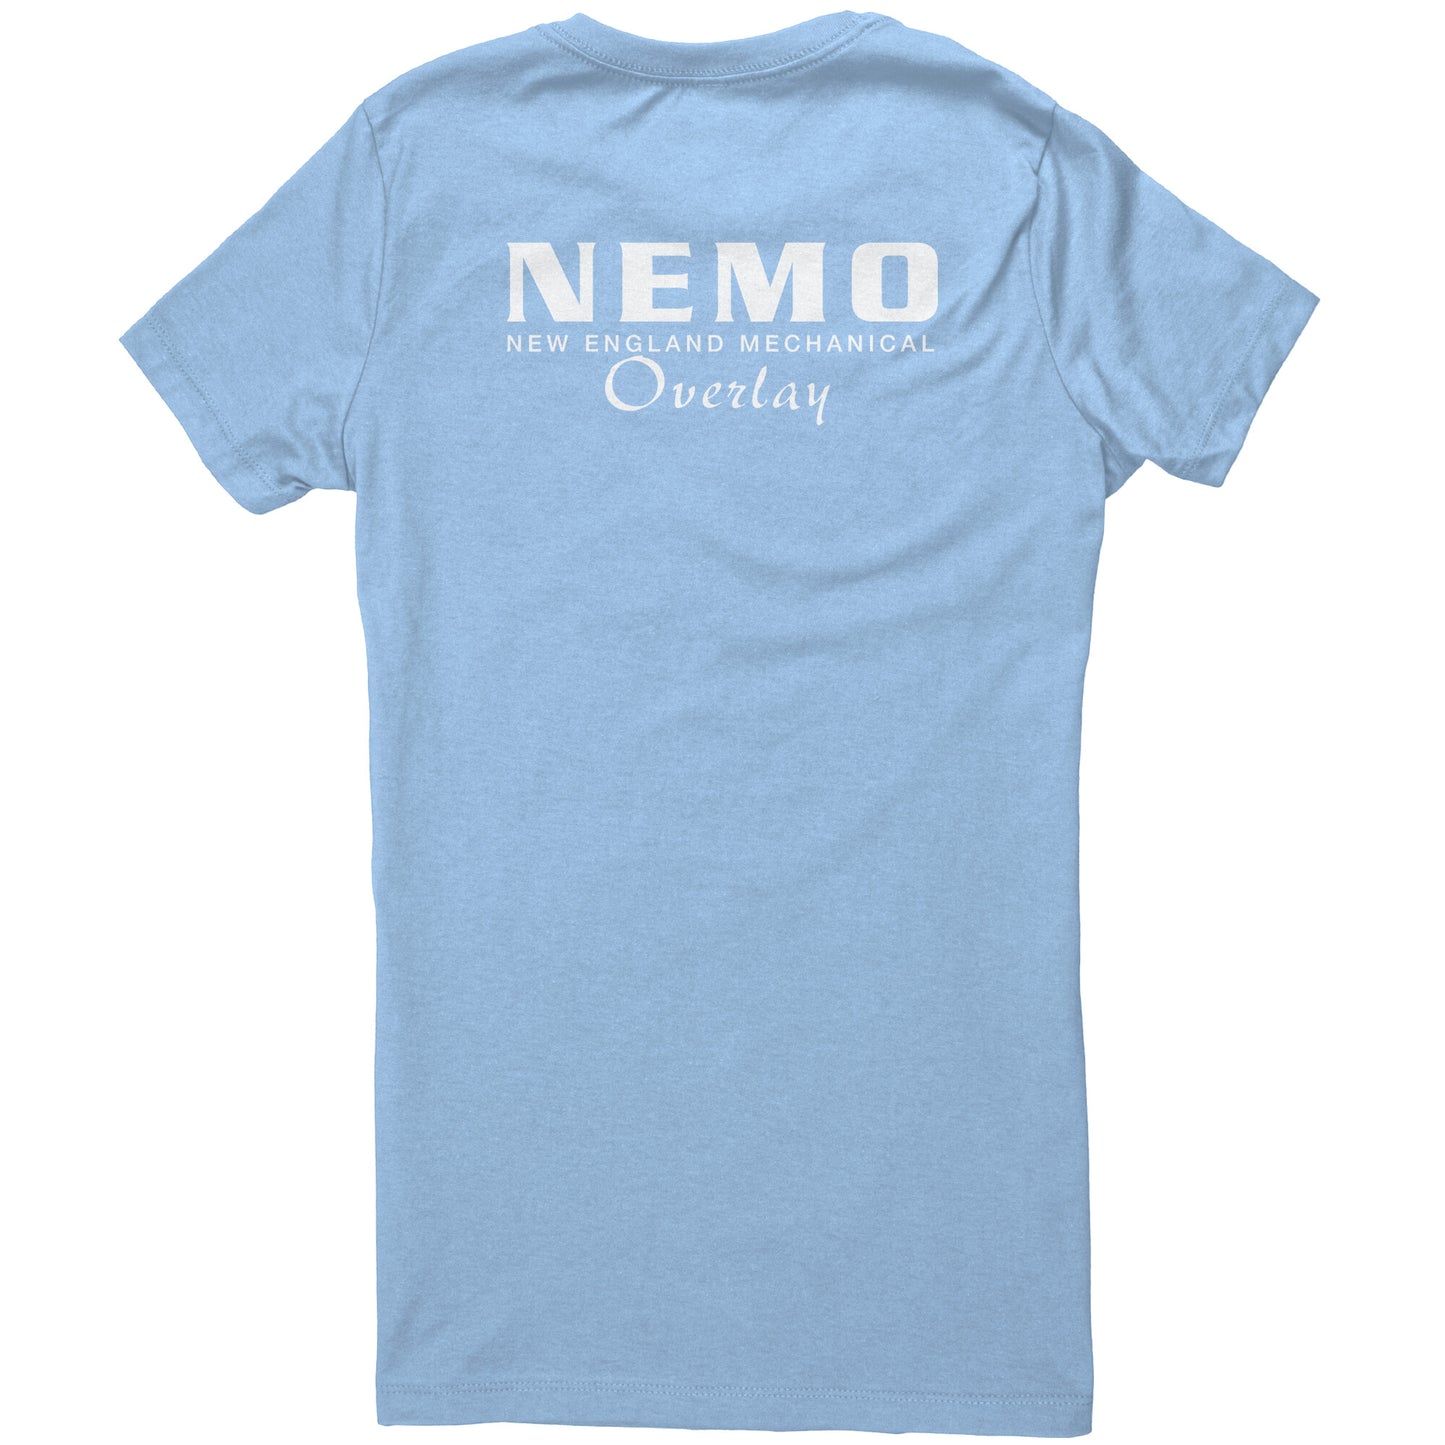 NEMO Women's Shirt